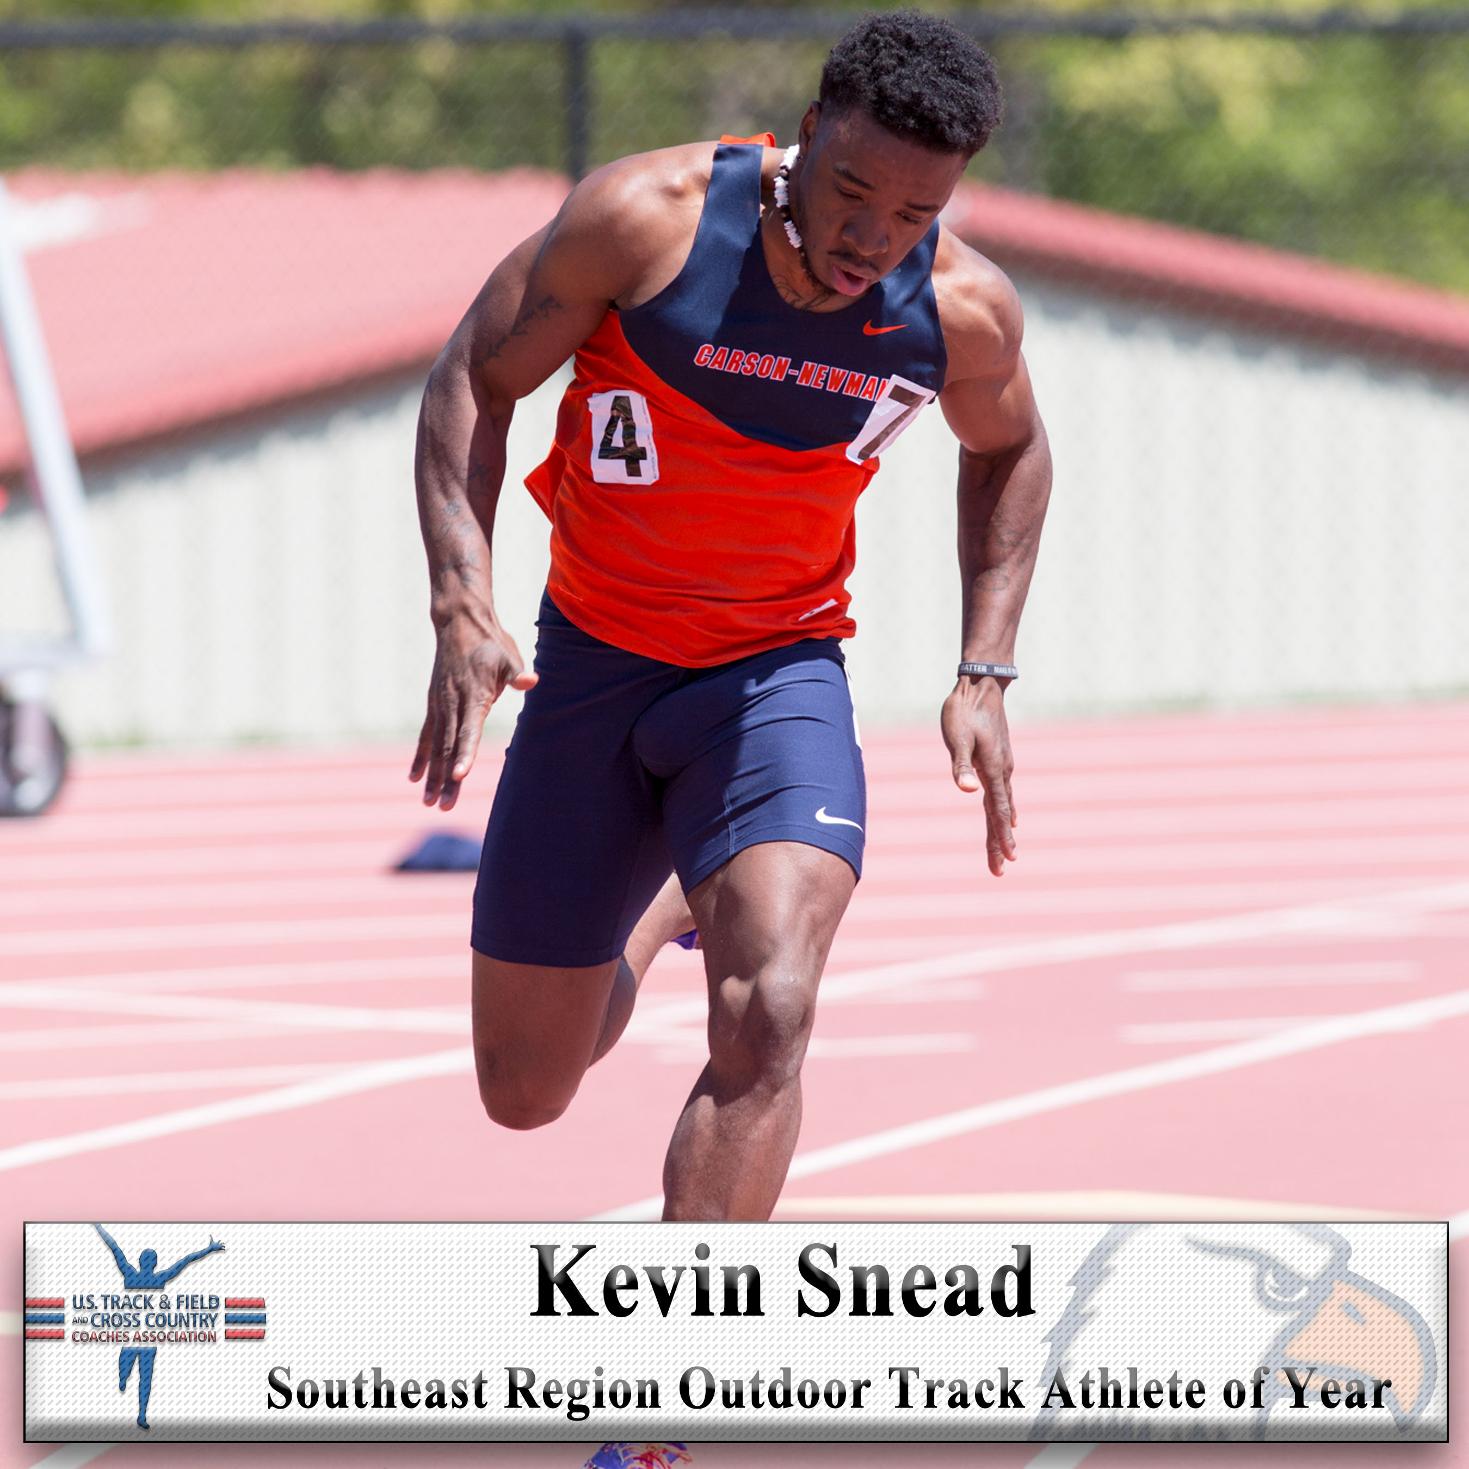 Snead tabbed Southeast Region Track Athlete of Year by USTFCCCA